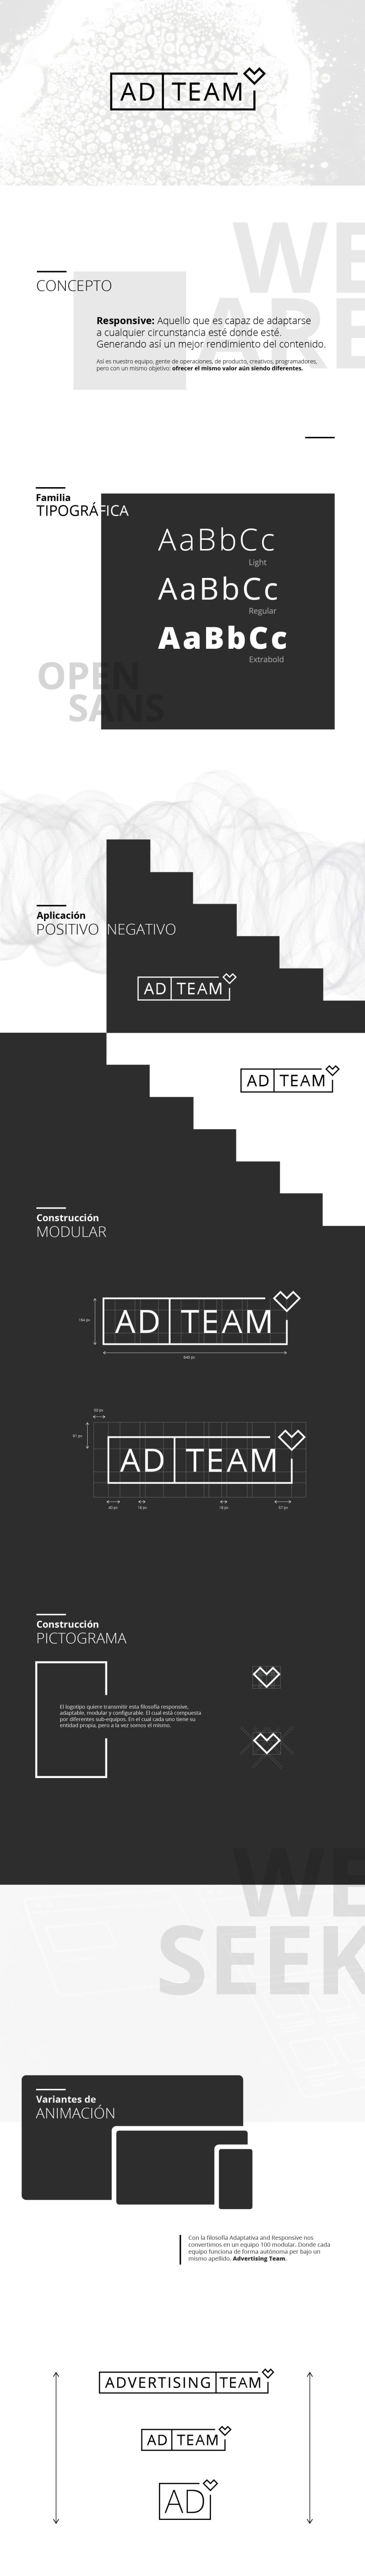 Brand Manual AD TEAM 1